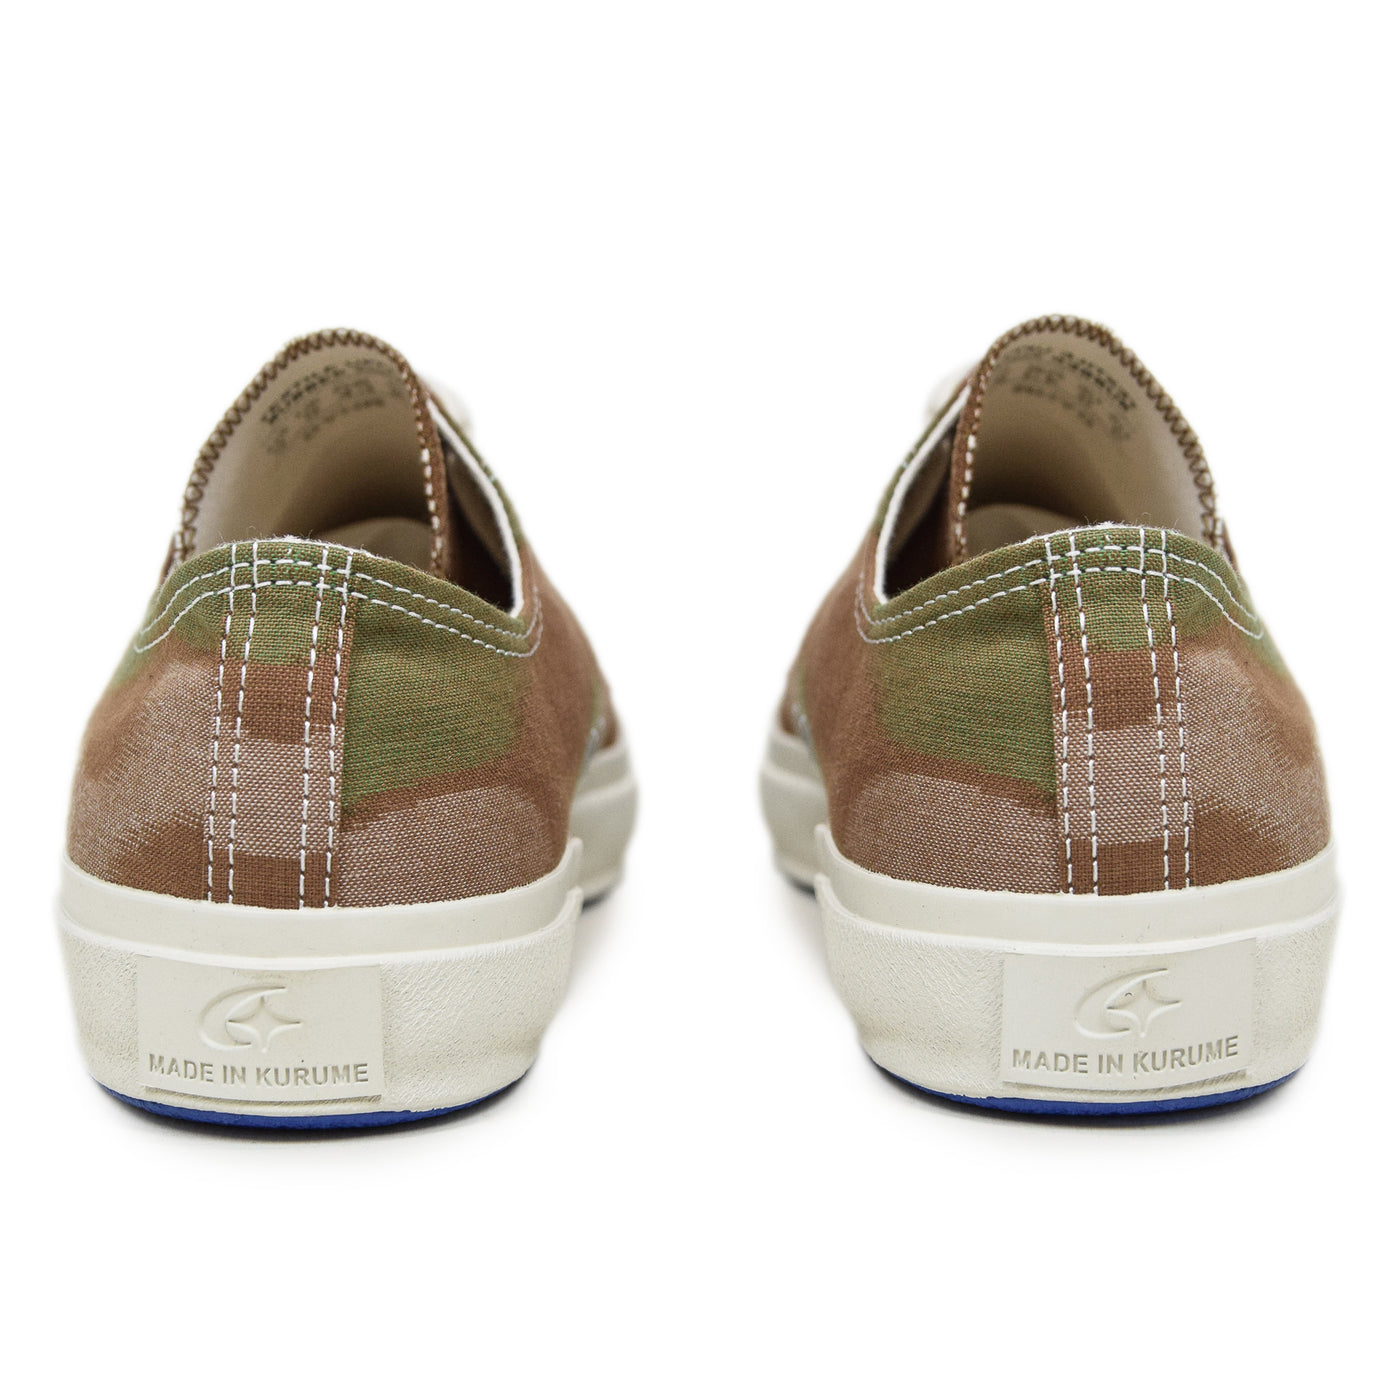 Moonstar Vulcanised Low Basket Camo Shoe Made In Japan back